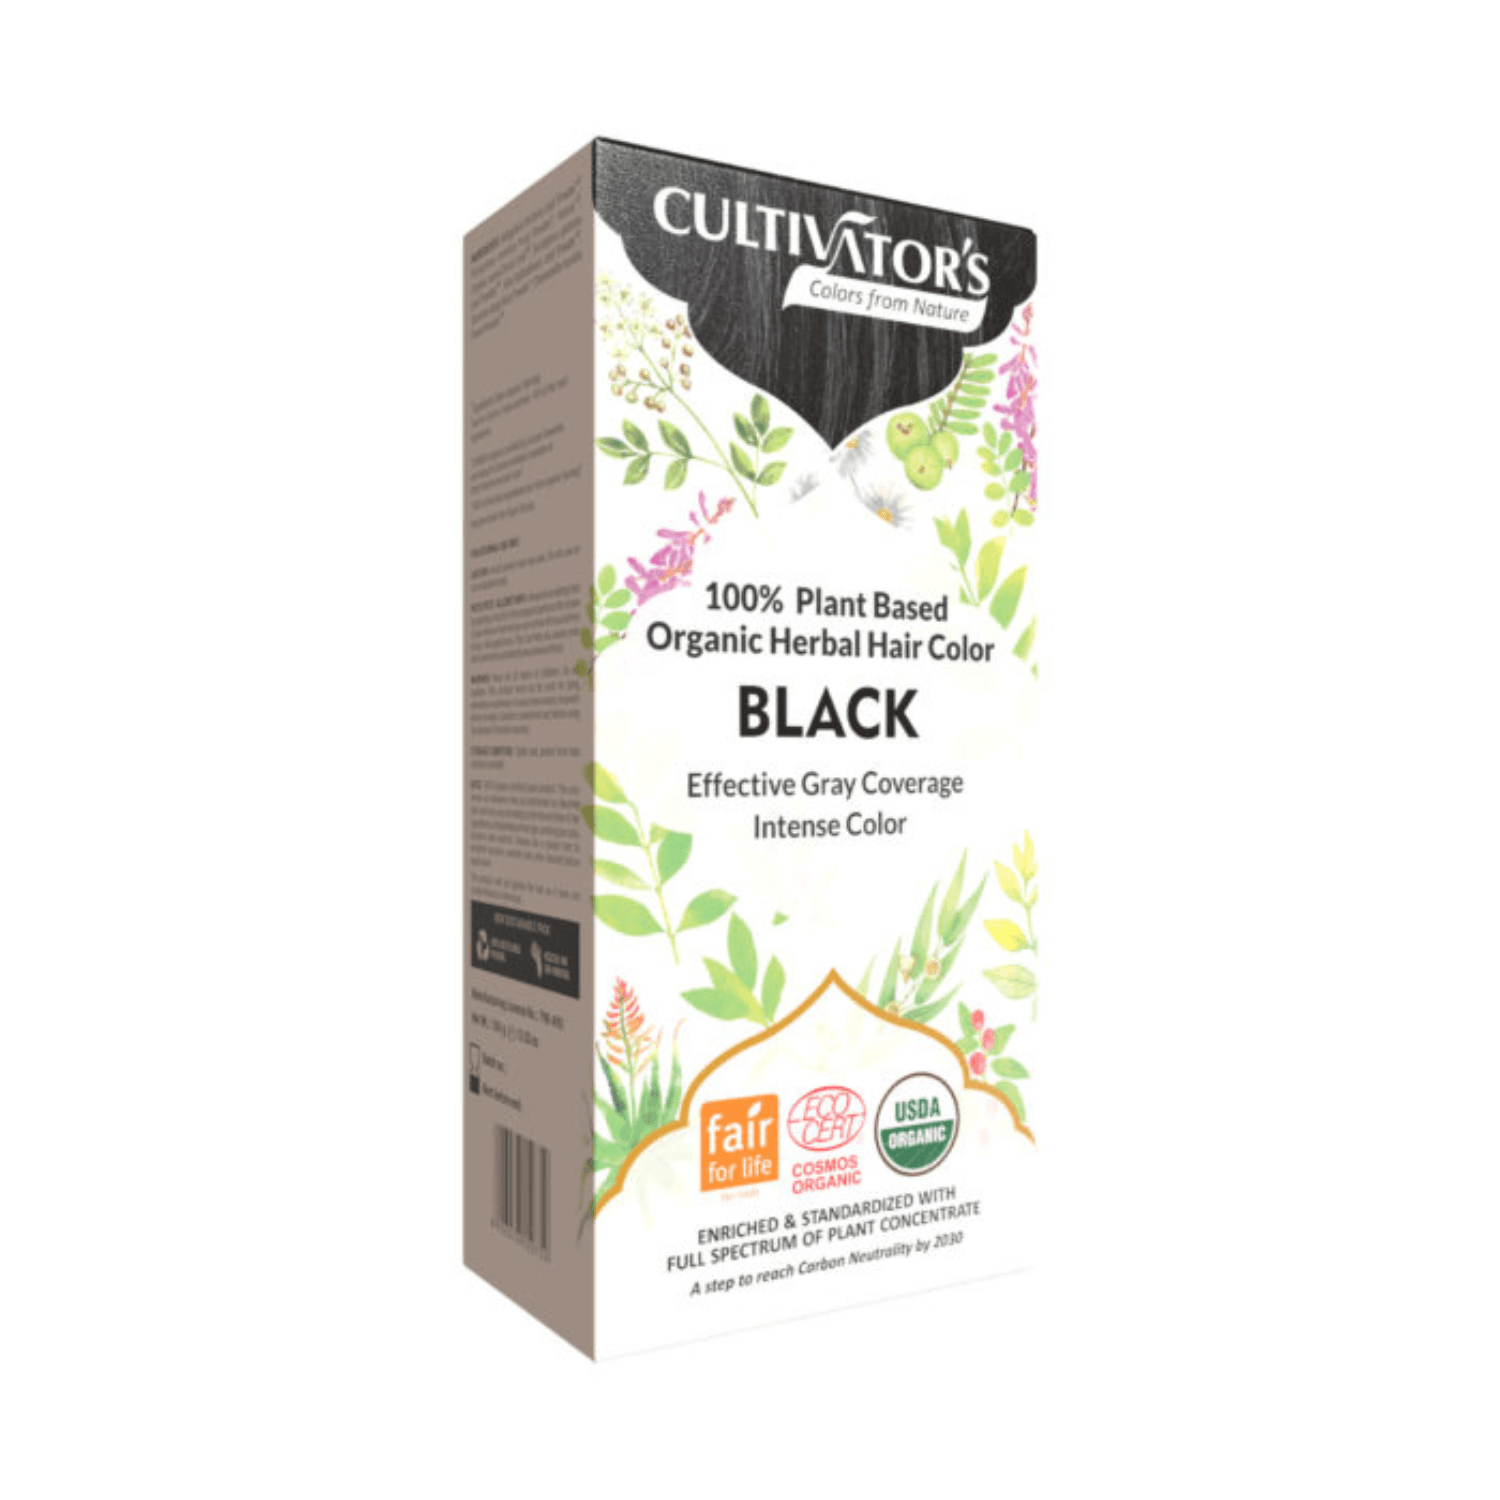 Cultivators Organic Herbal Hair Color, Black